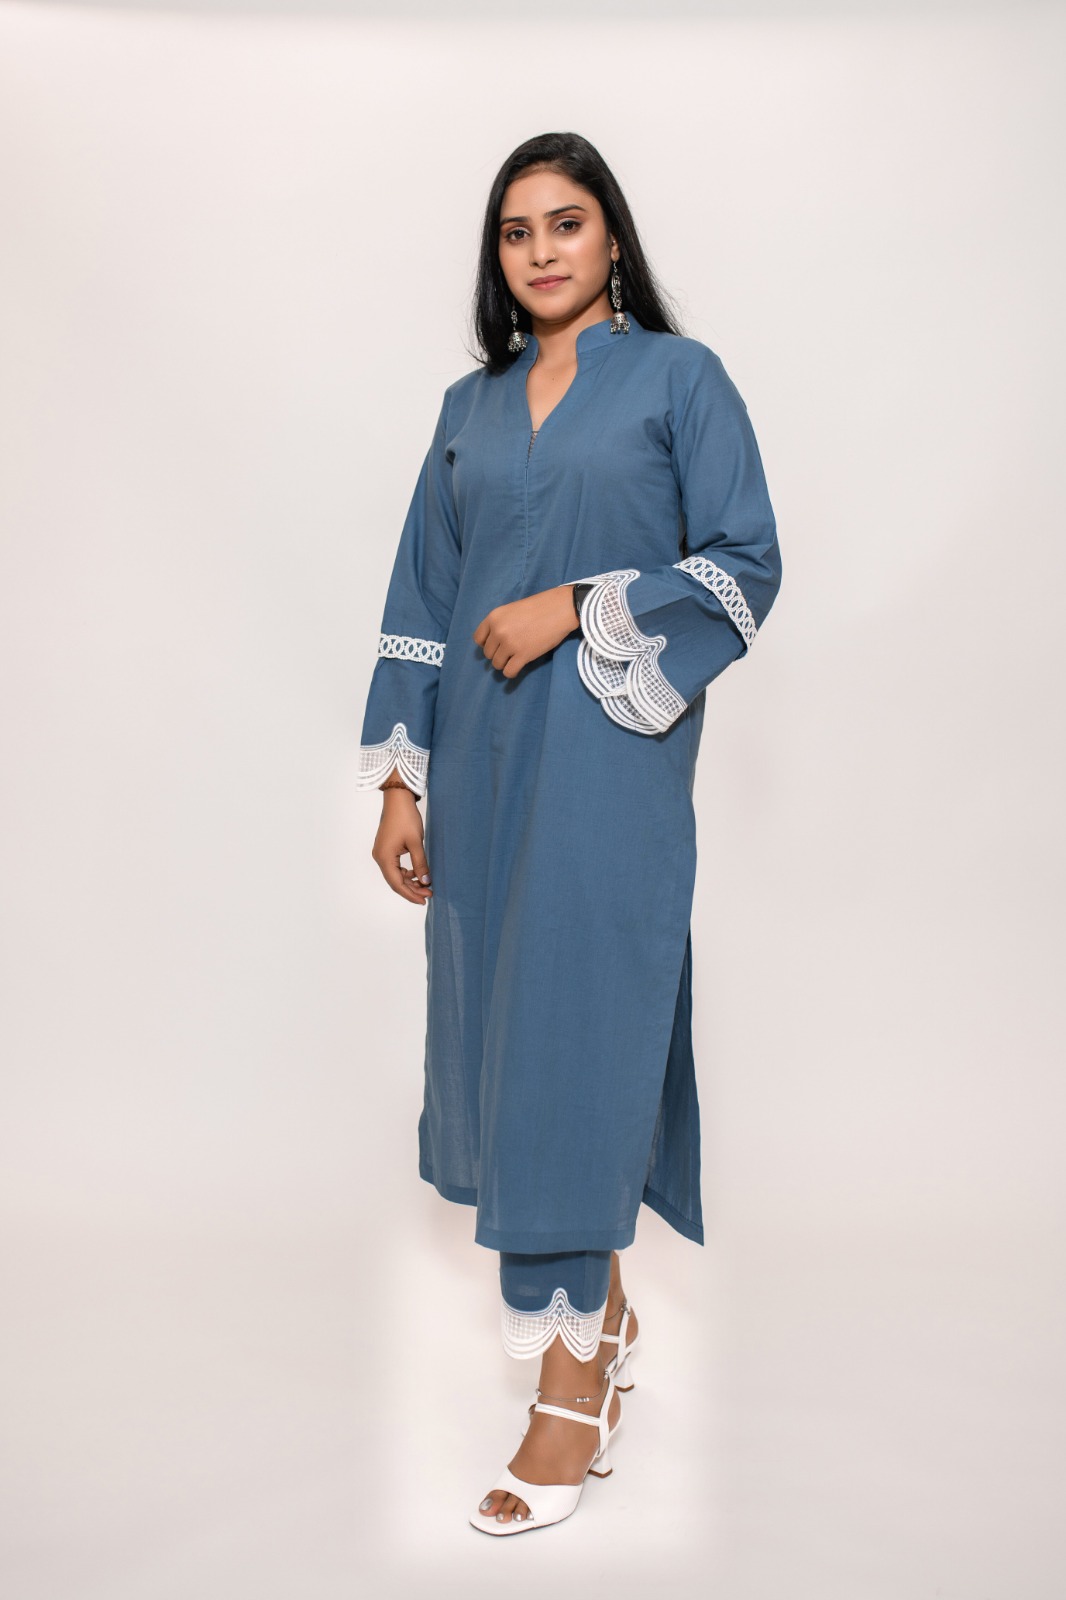 Women Ethnic Cotton Printed Bell Sleeves Kurti Tunic Kurta Shirt Dress NK19  | eBay